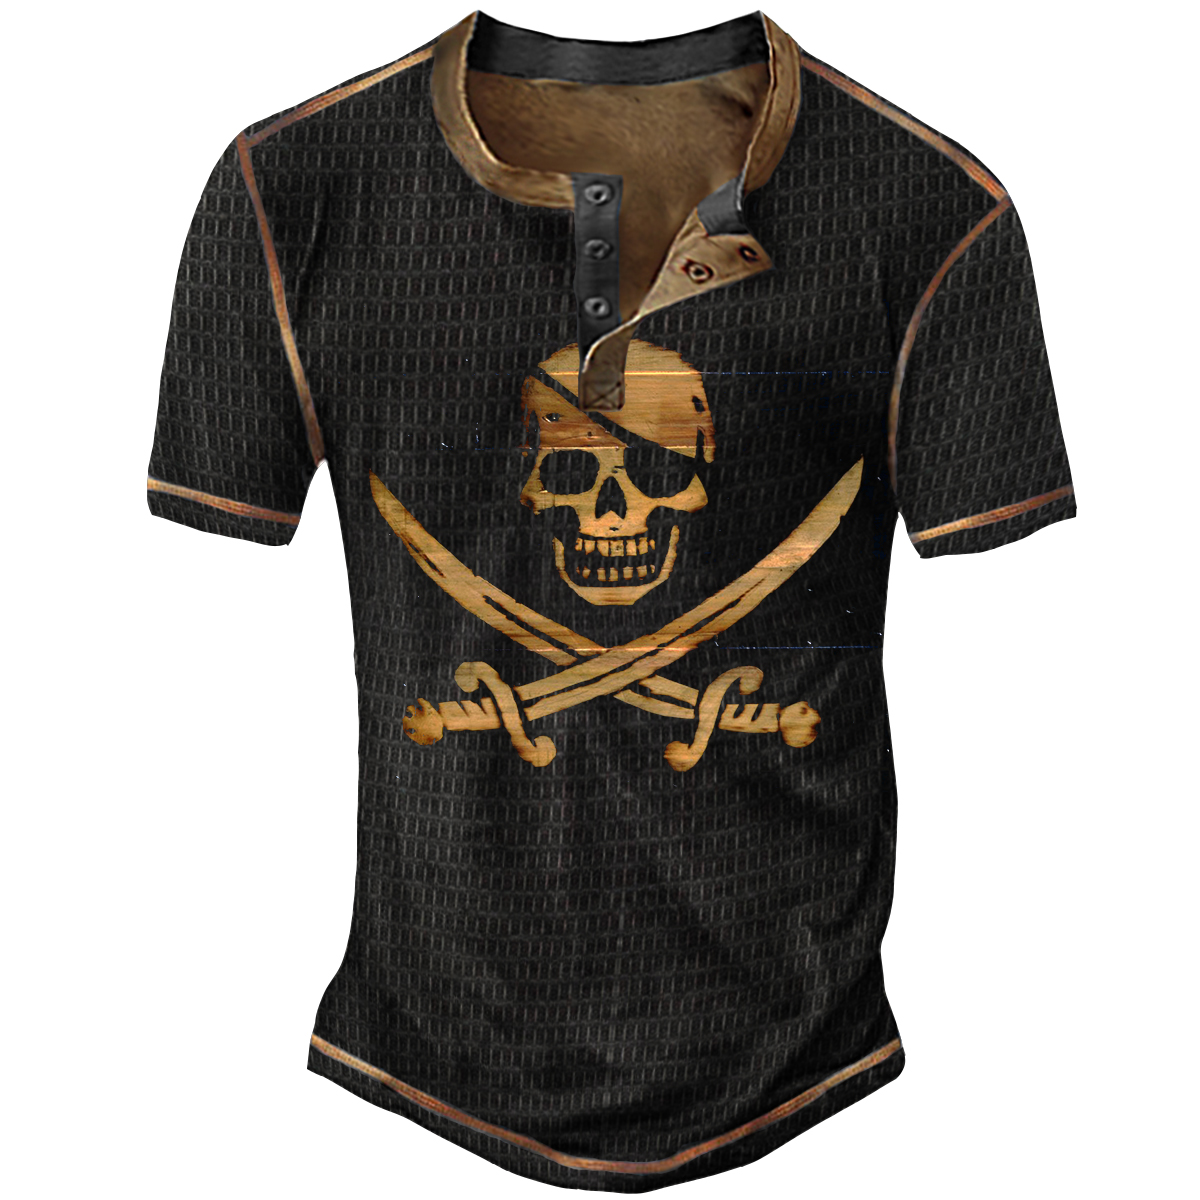 Men's Vintage Pirate Skull Chic T-shirt